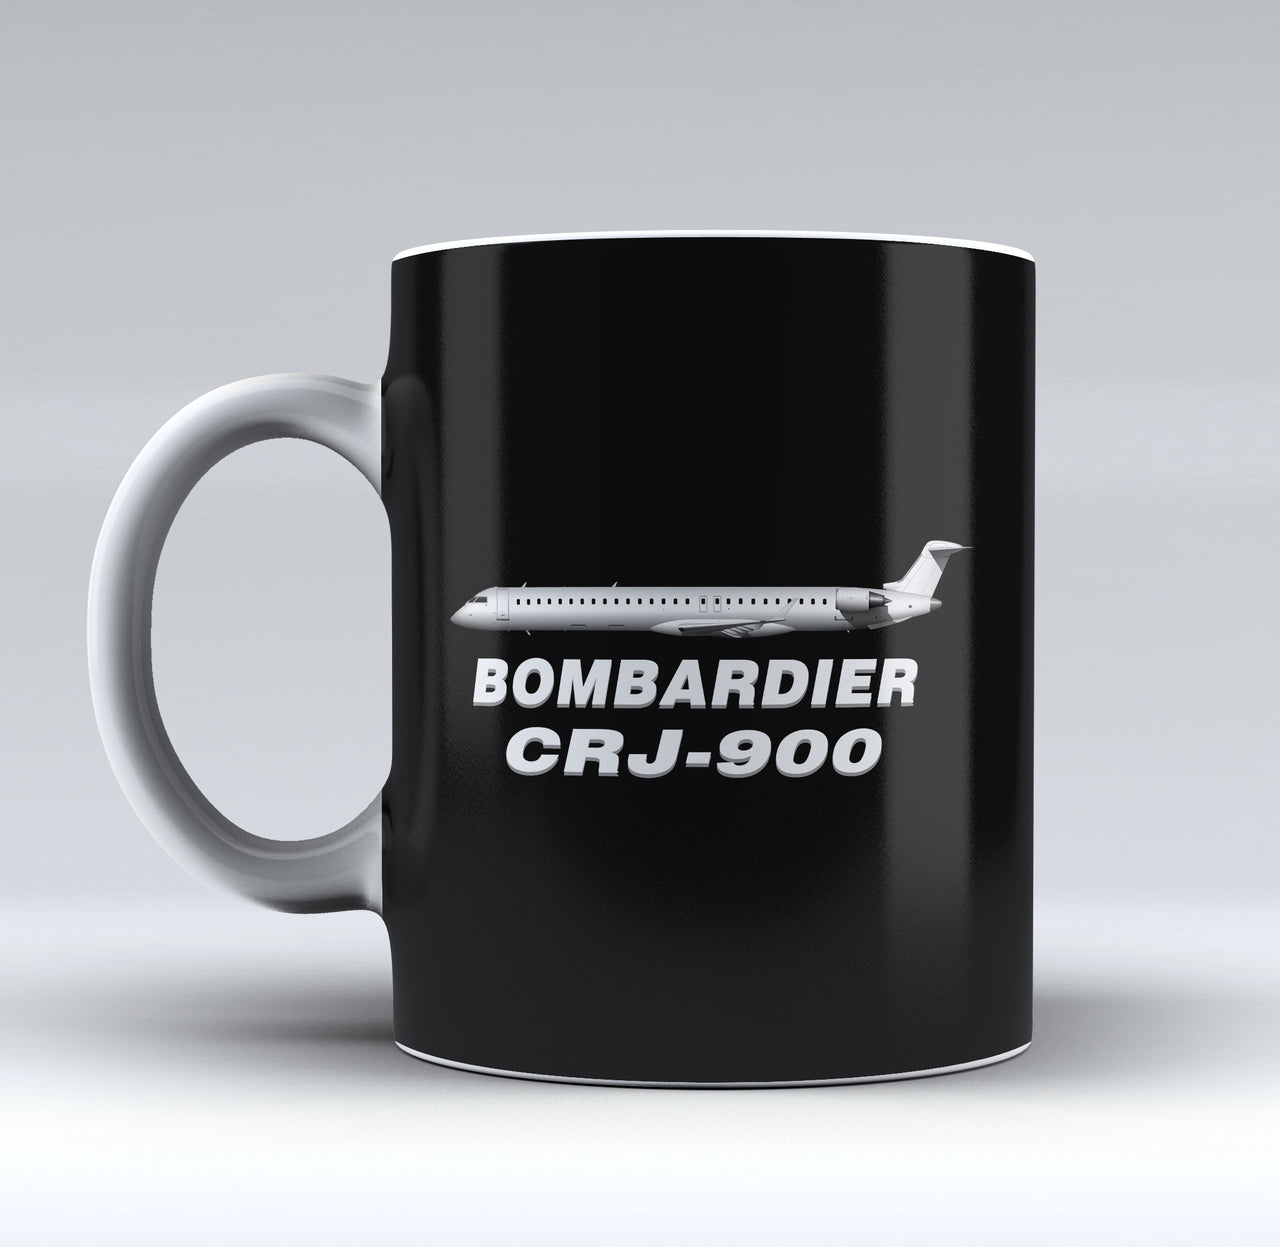 The Bombardier CRJ-900 Designed Mugs